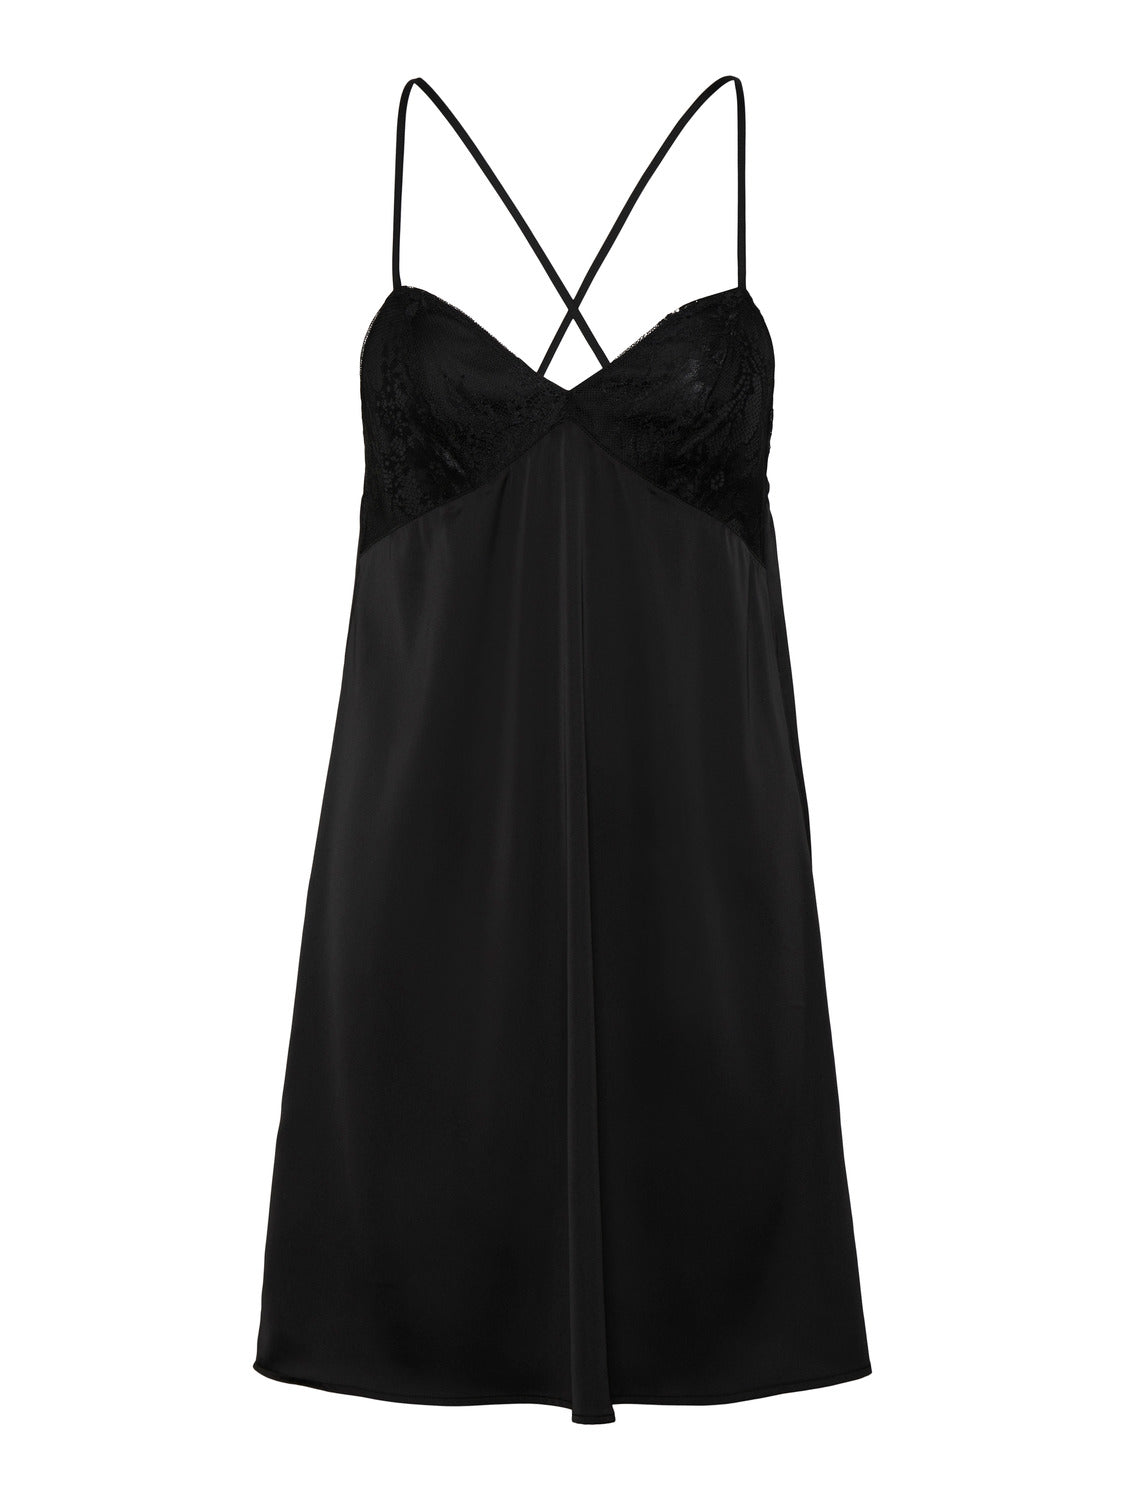 VMBENILLE Nightgown - Black